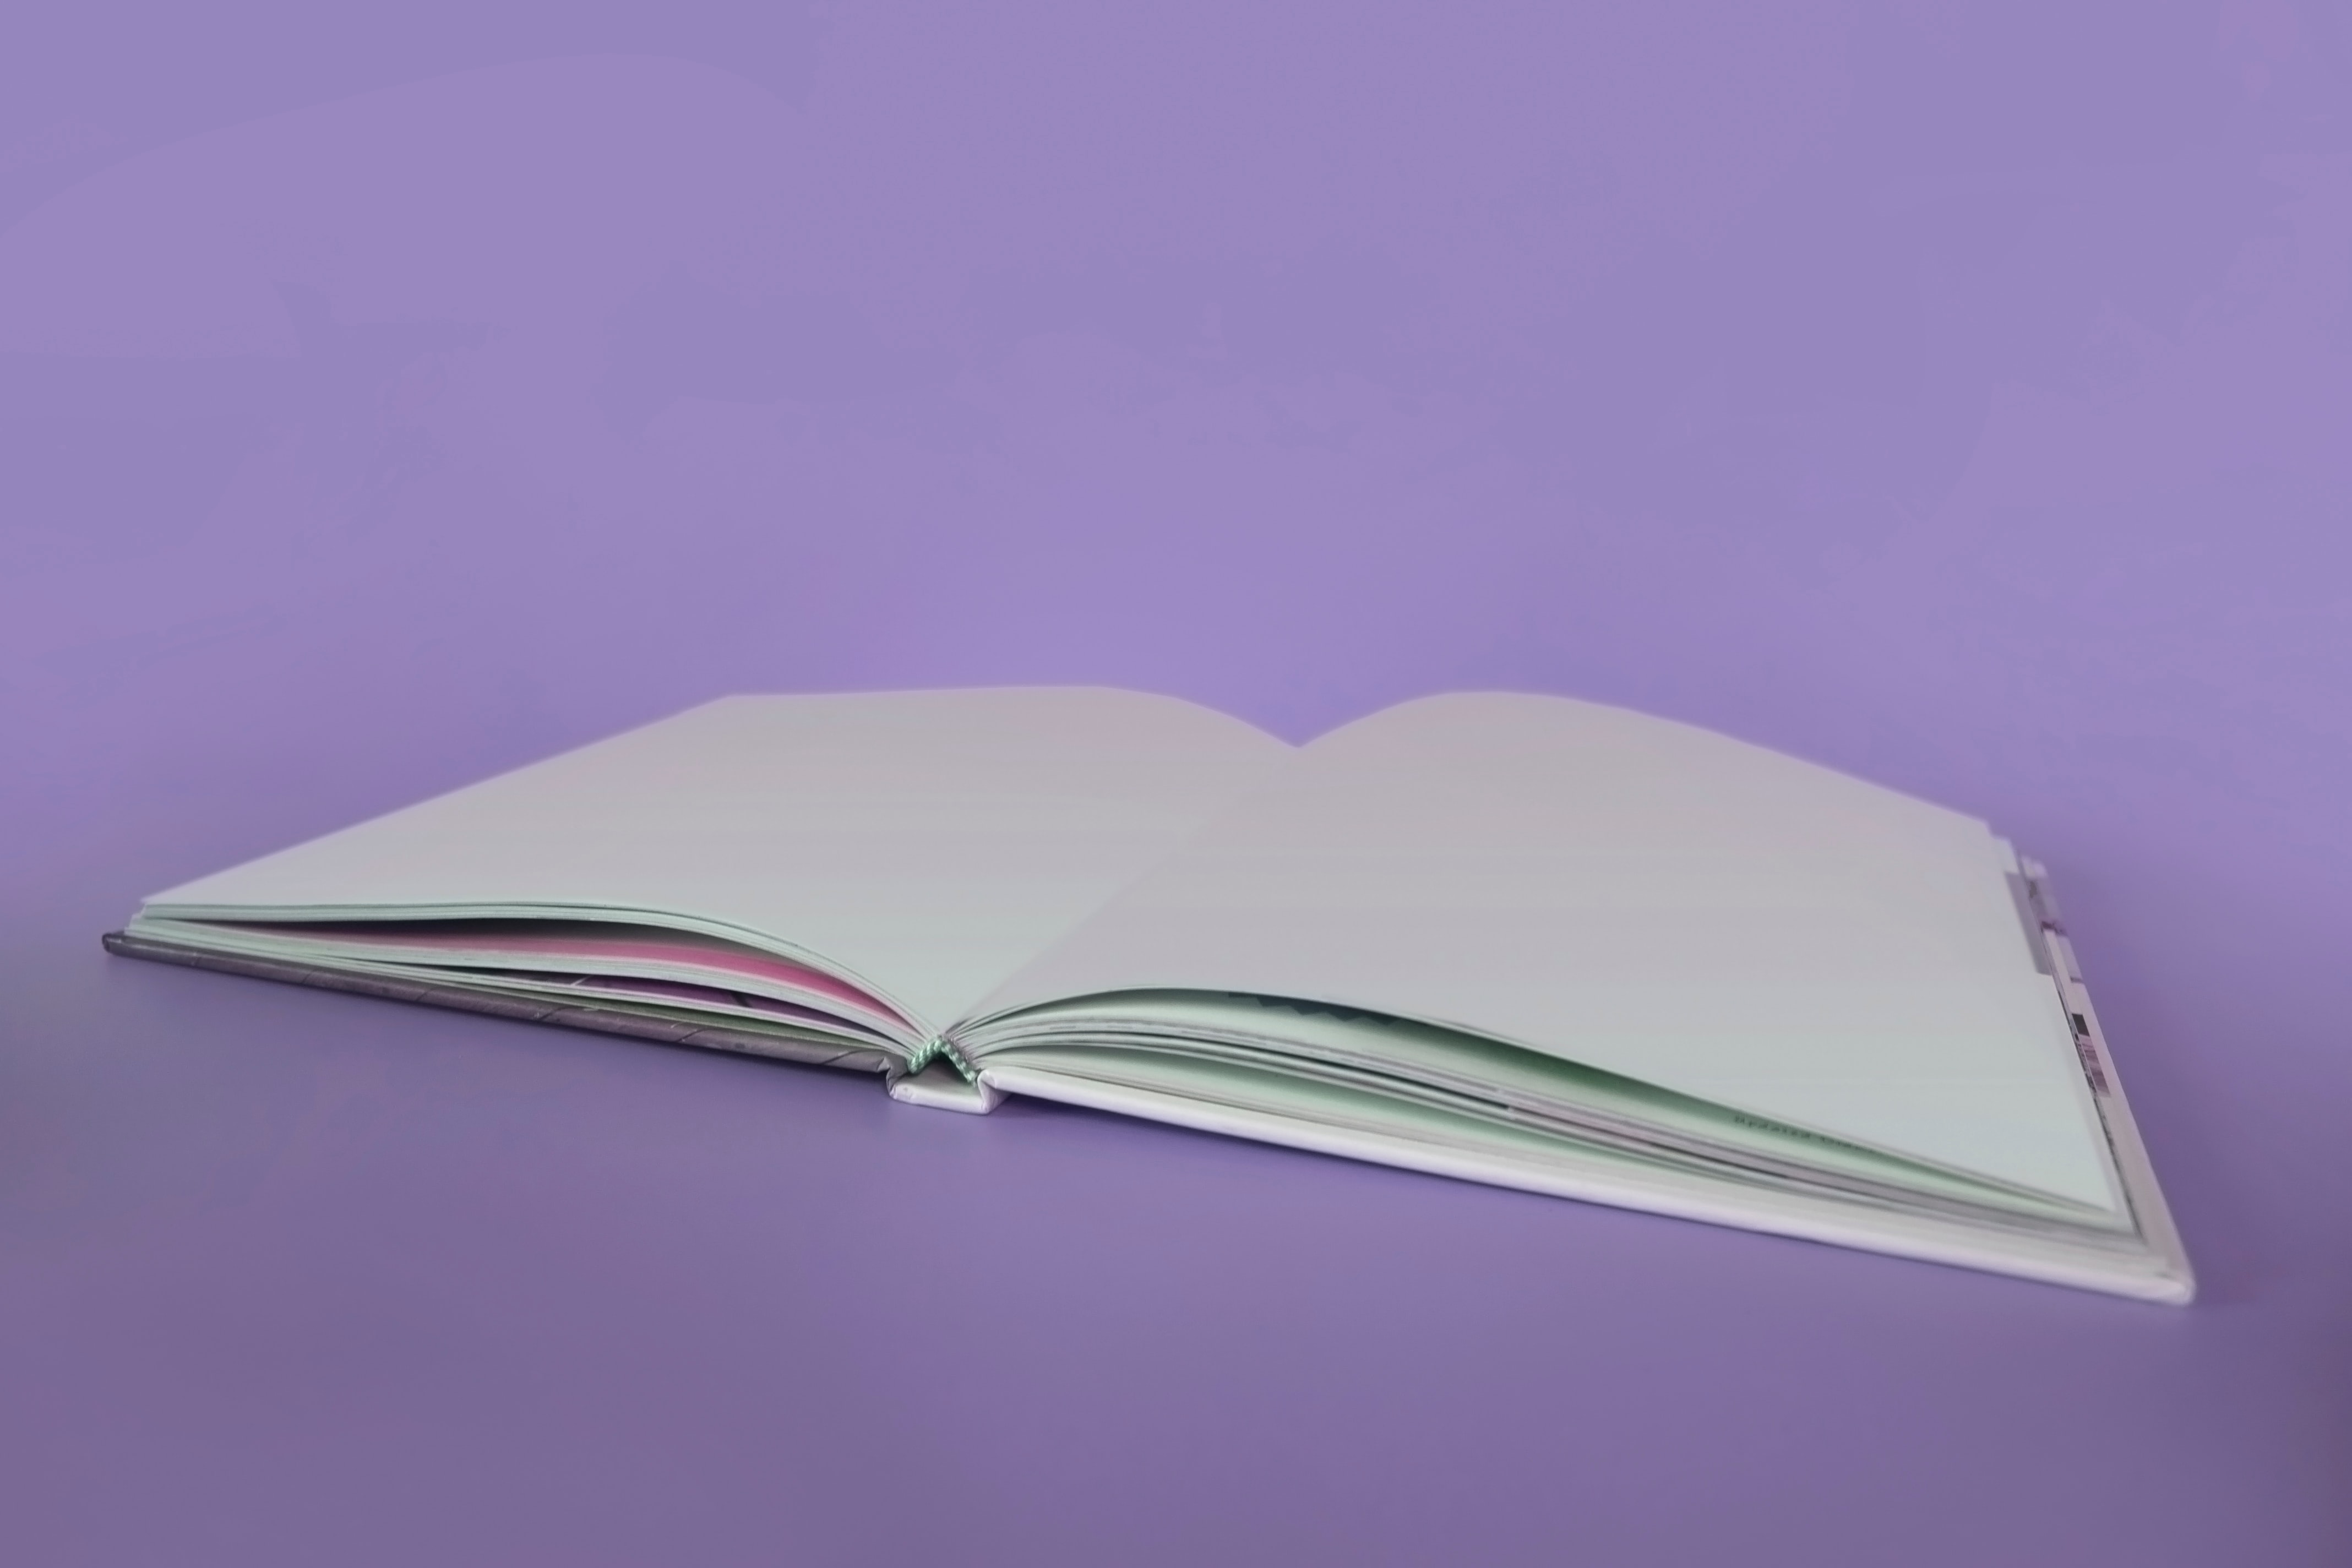 Book on purple background